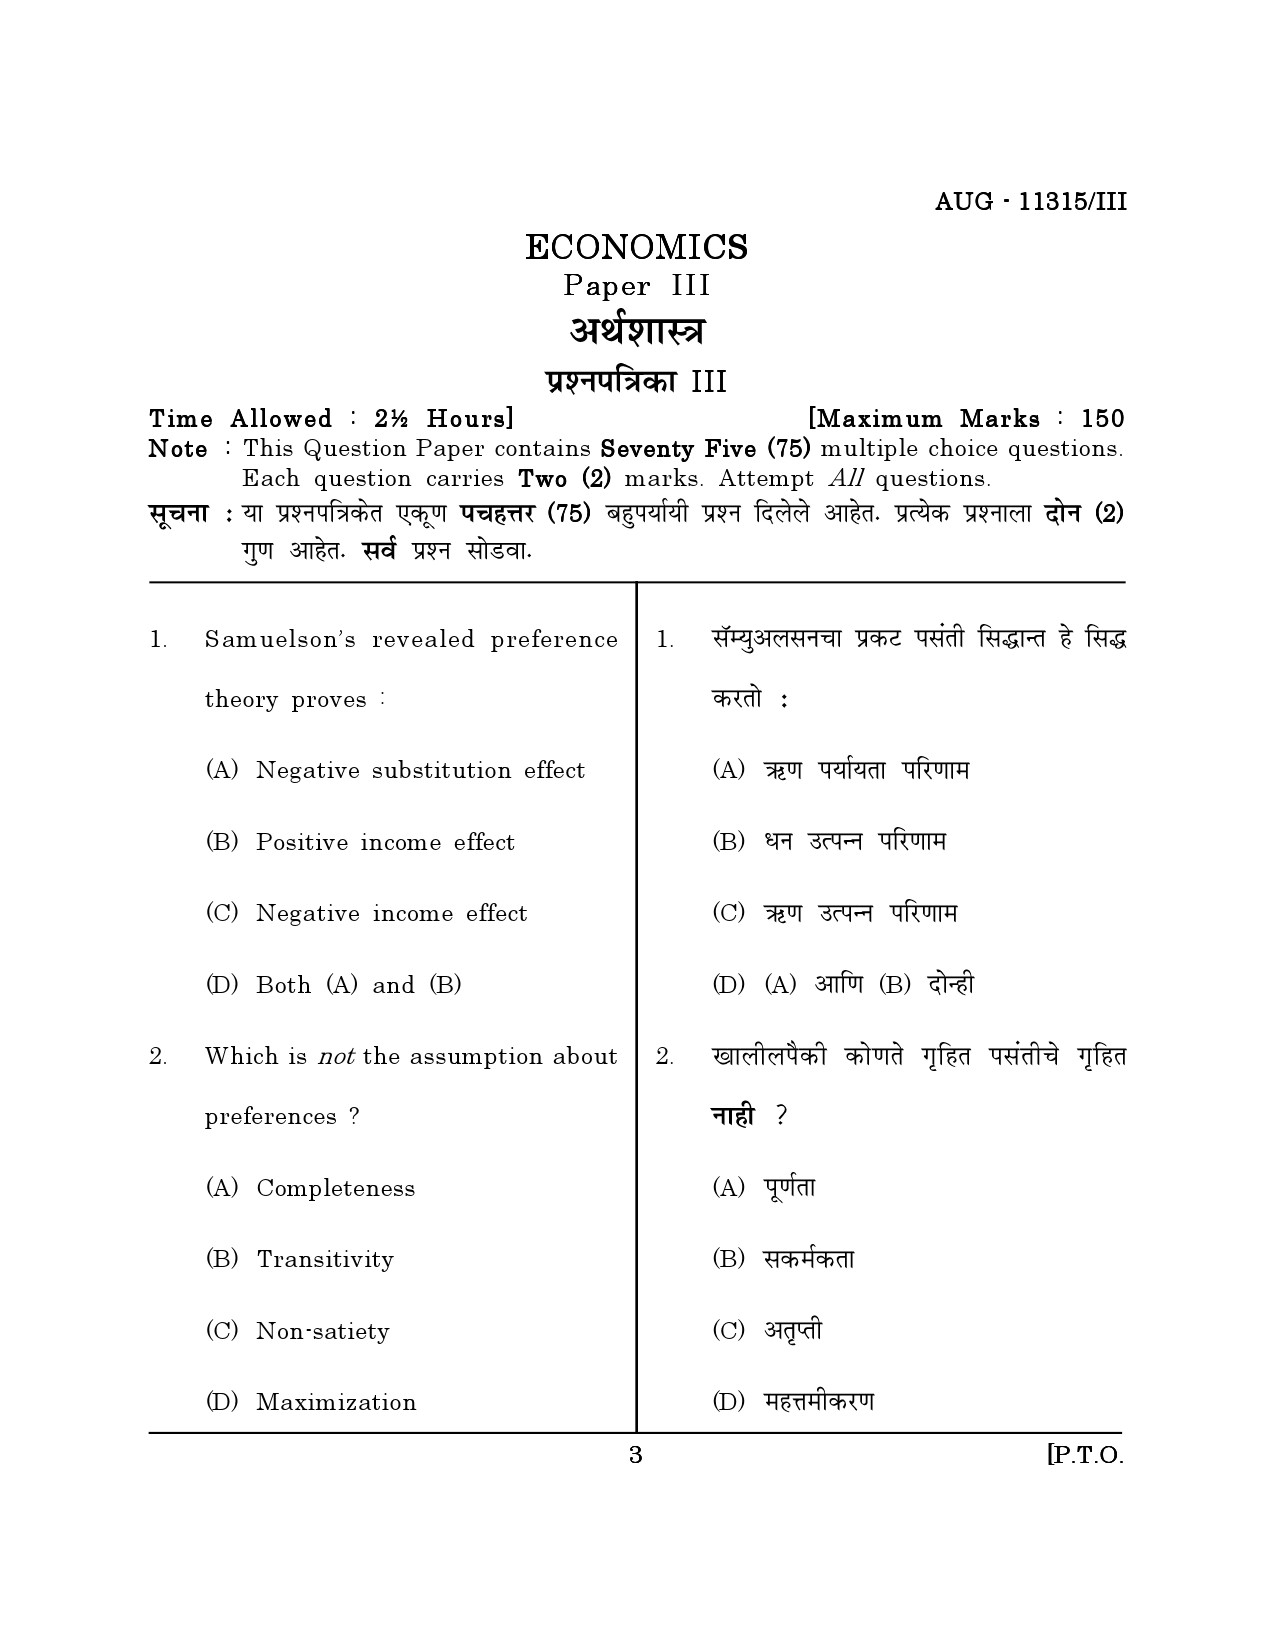 Maharashtra SET Economics Question Paper III August 2015 2